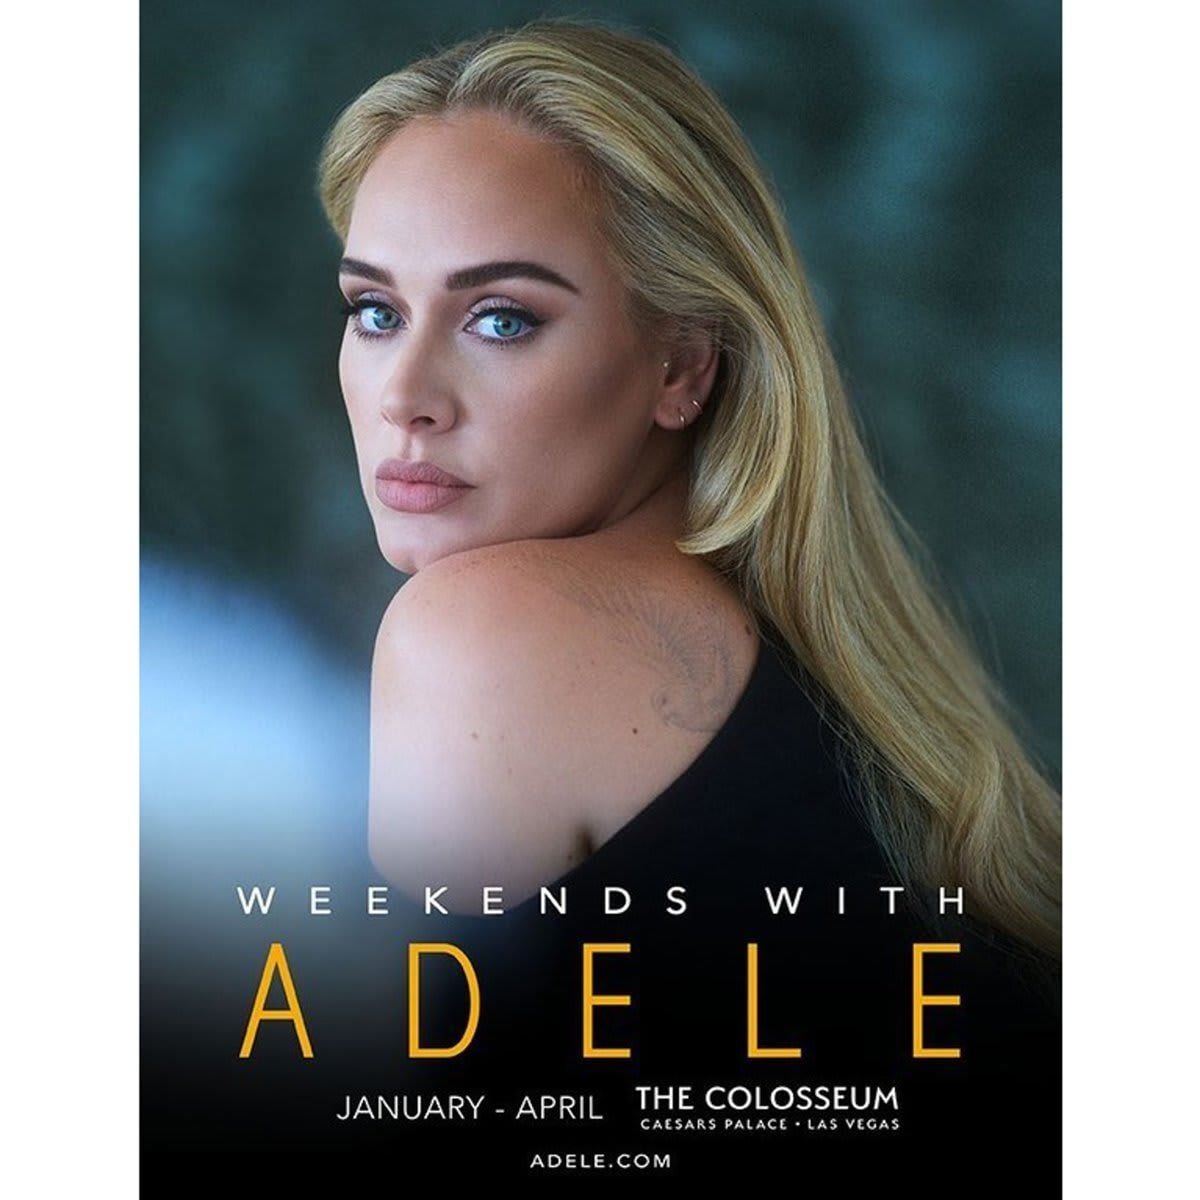 Adele's residency in Las Vegas starts January 21, 2022